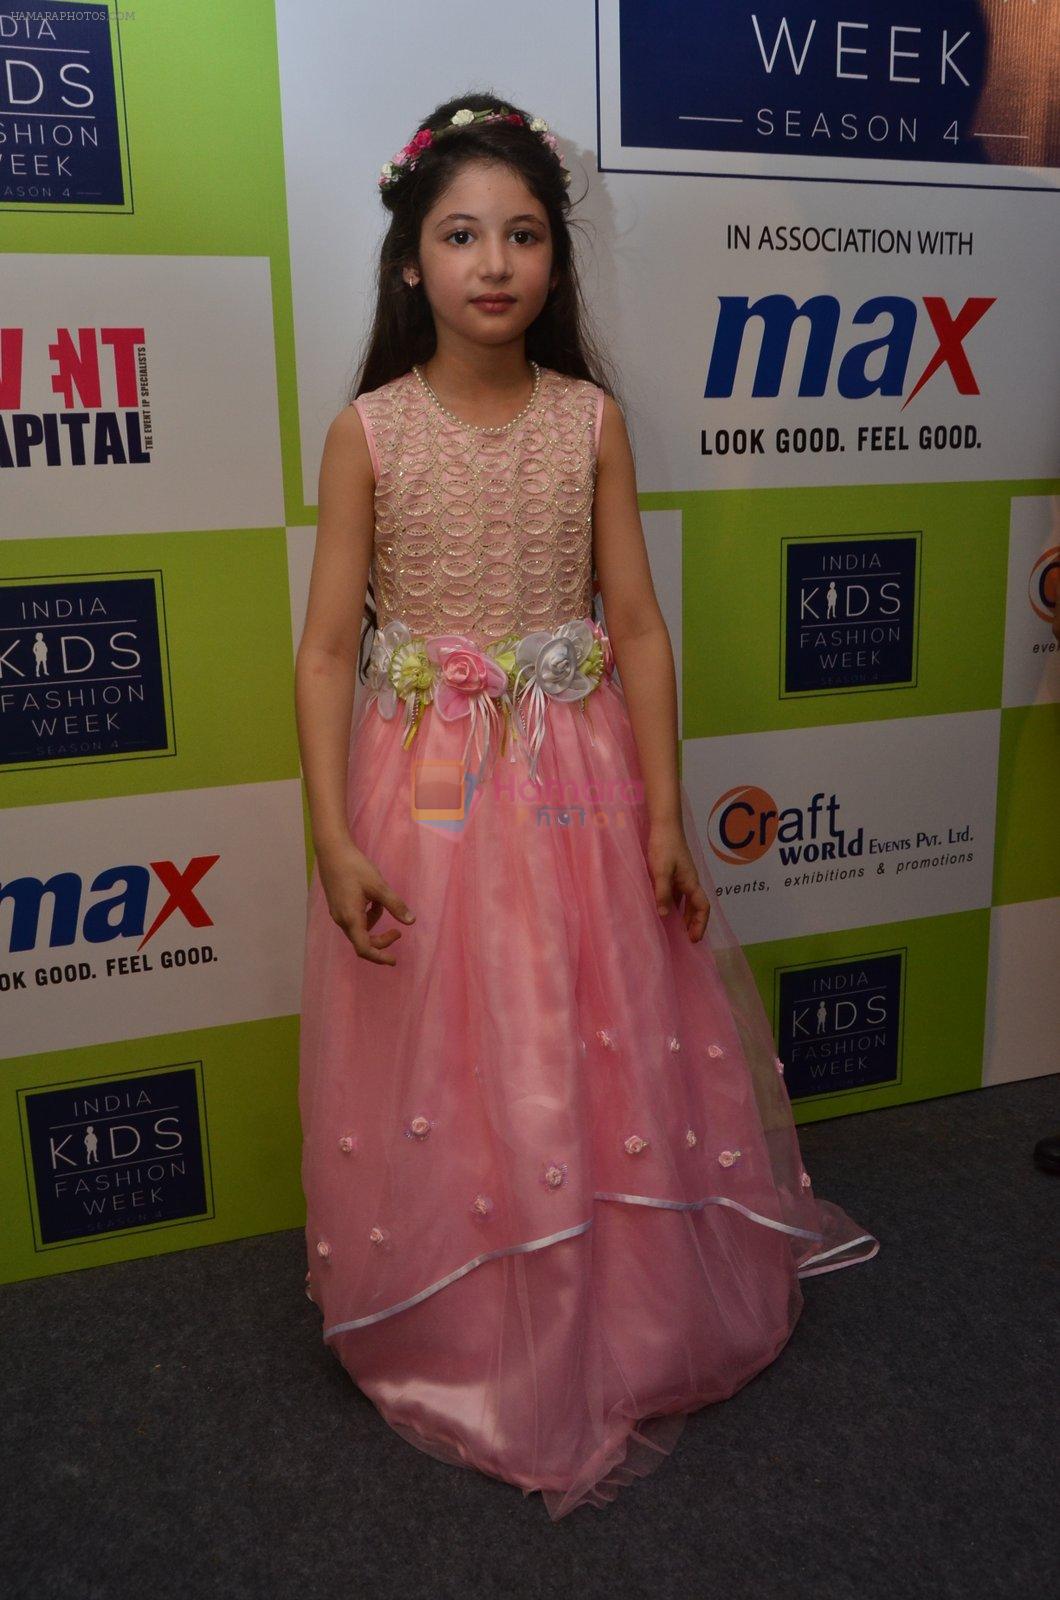 Harshaali Malhotra on ramp for Kids fashion week on 3rd June 2016